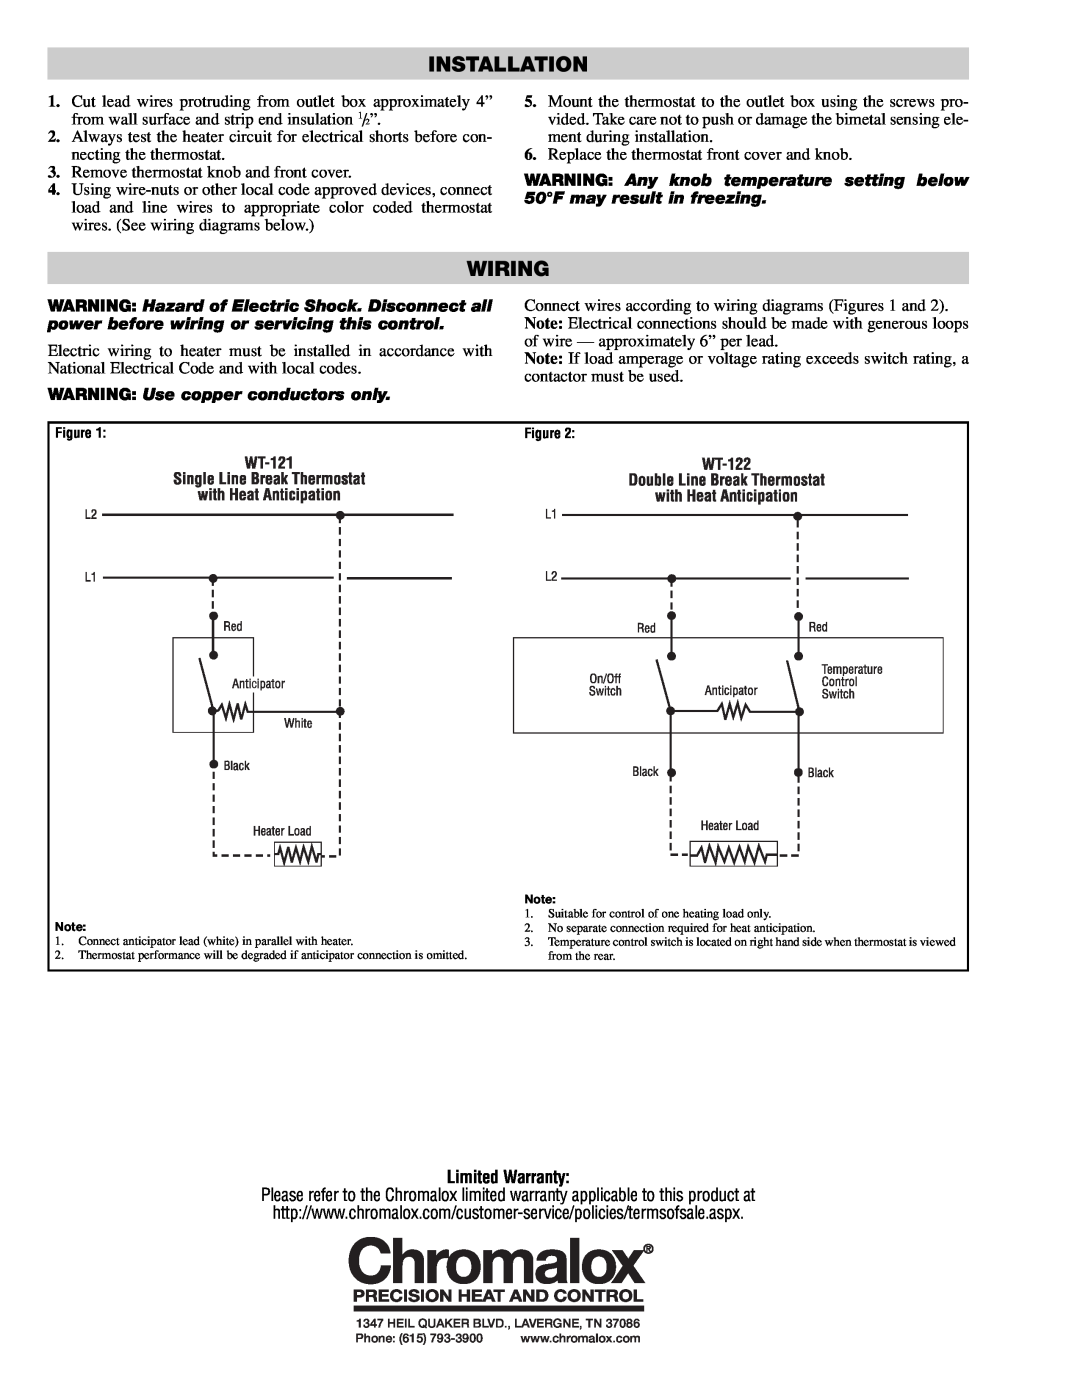 Chromalox PK477 installation instructions Installation, Wiring, Limited Warranty 